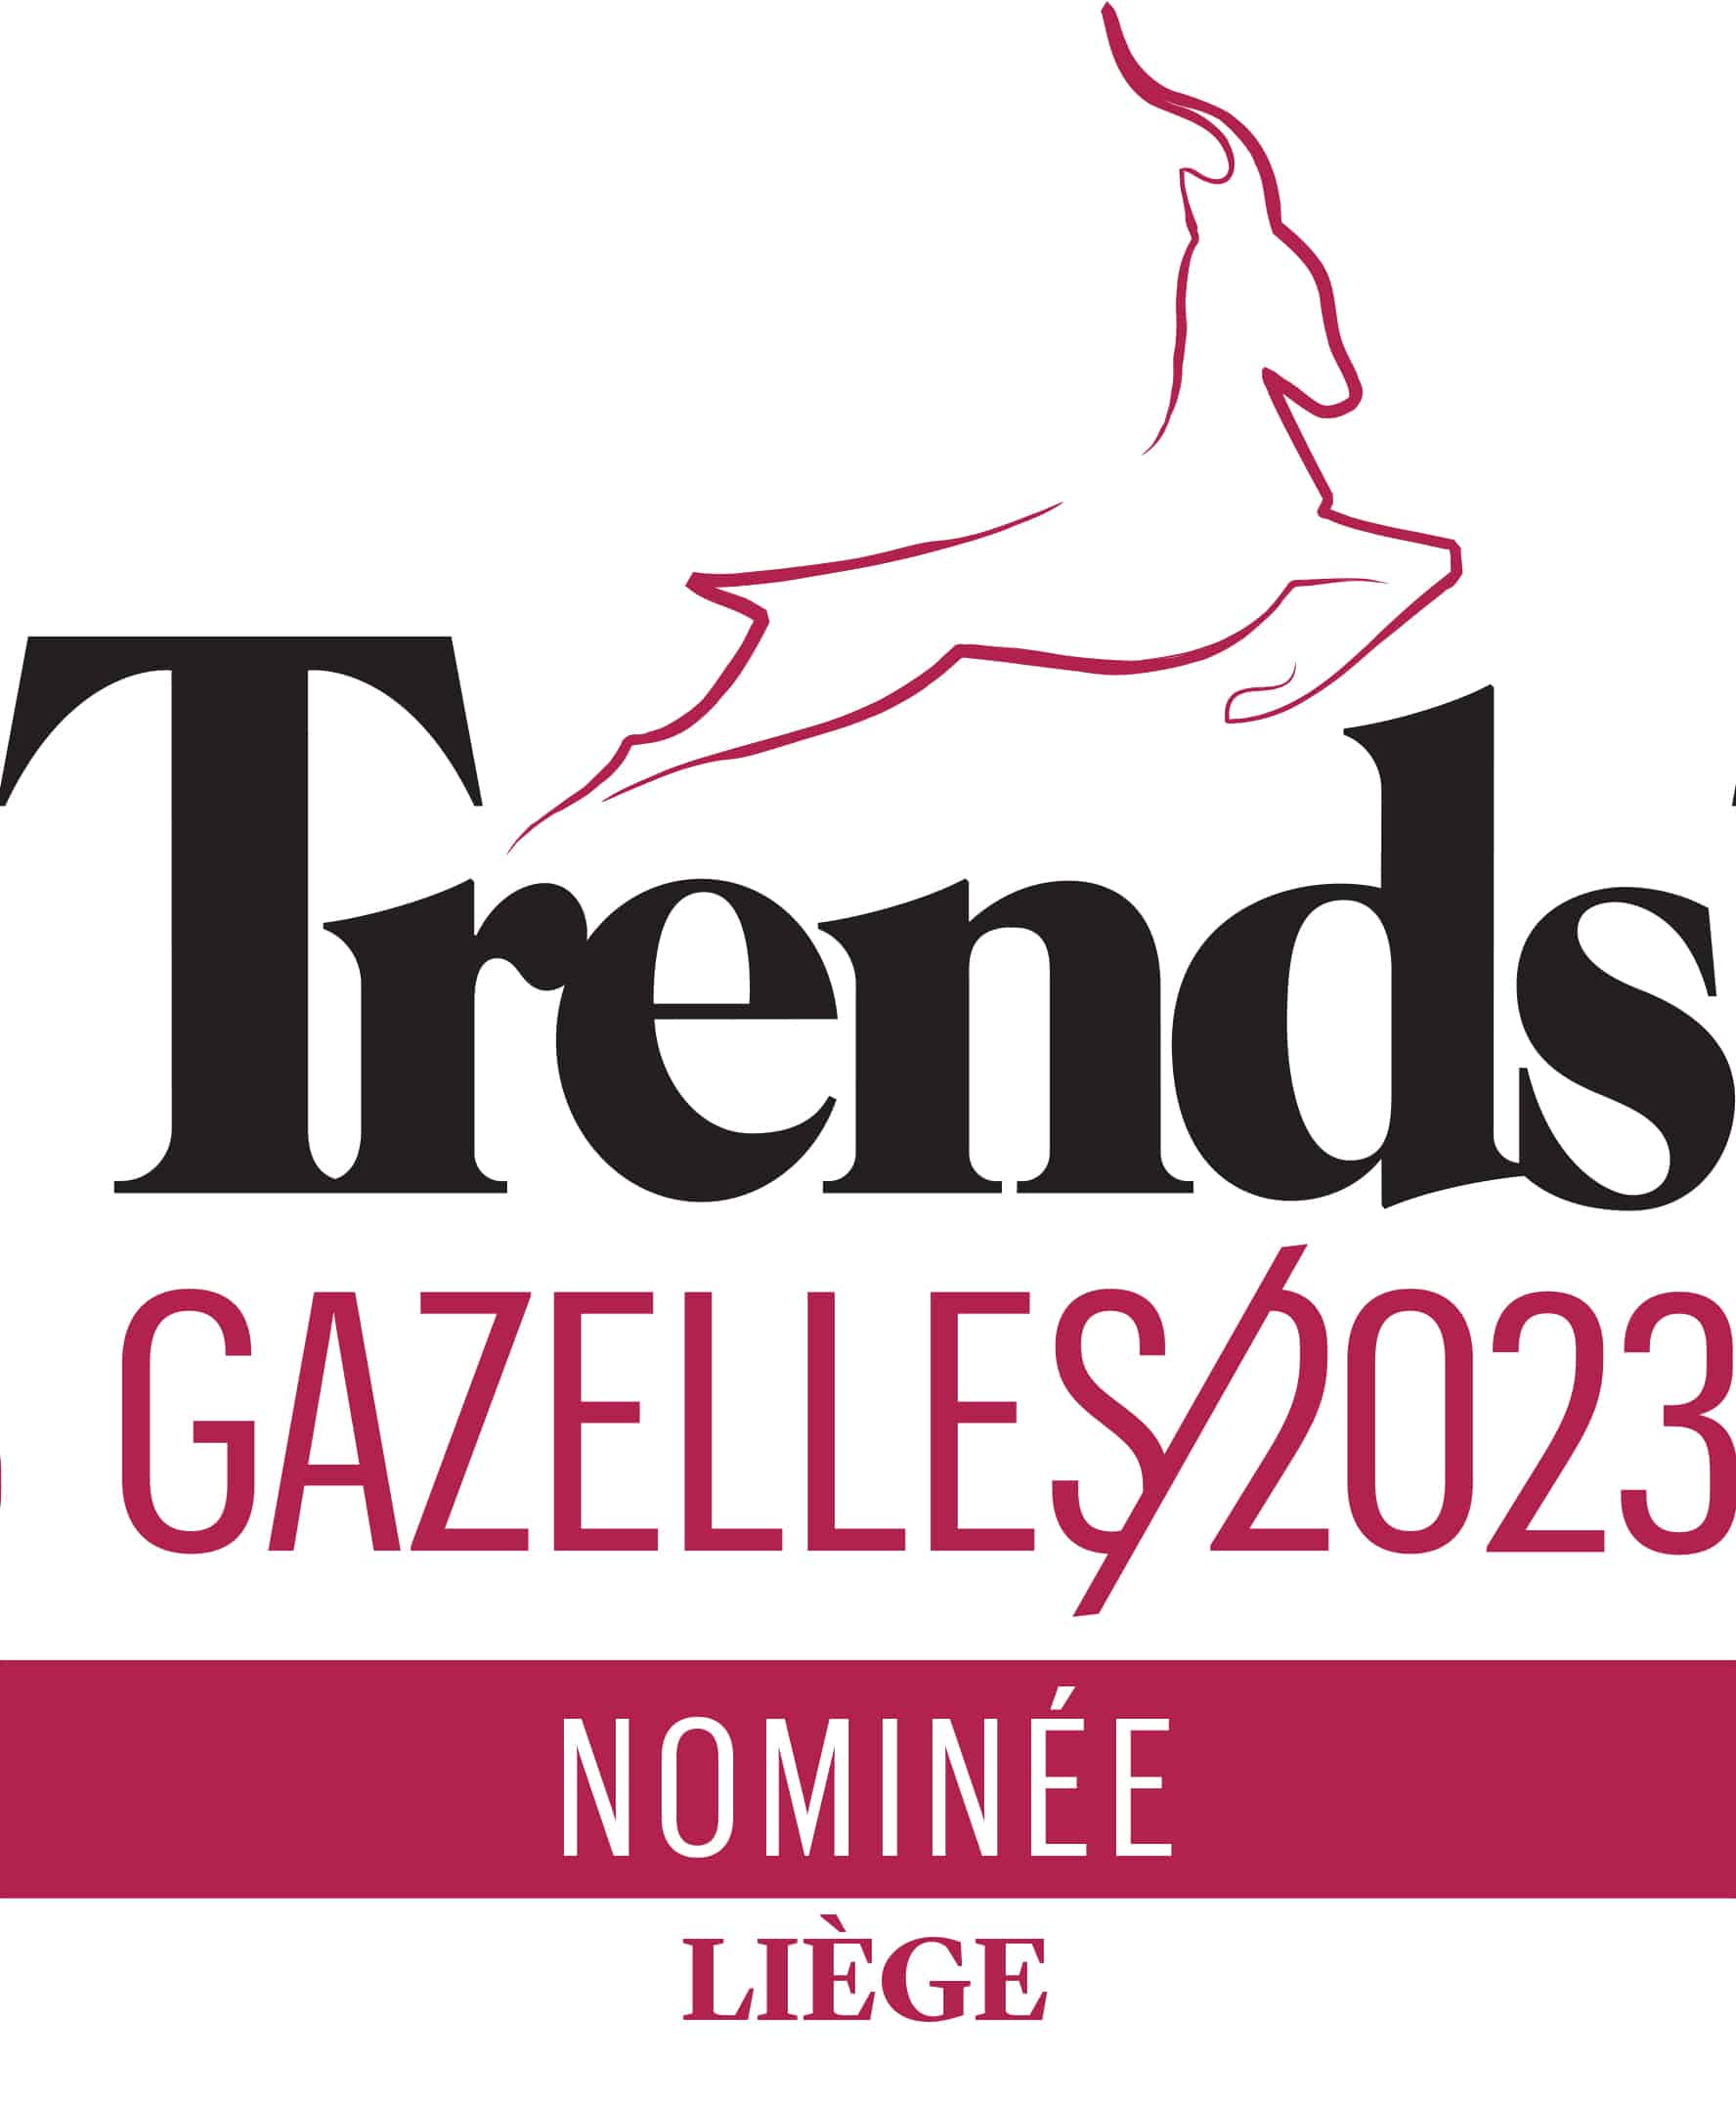 Trends Gazelles nomination 2023